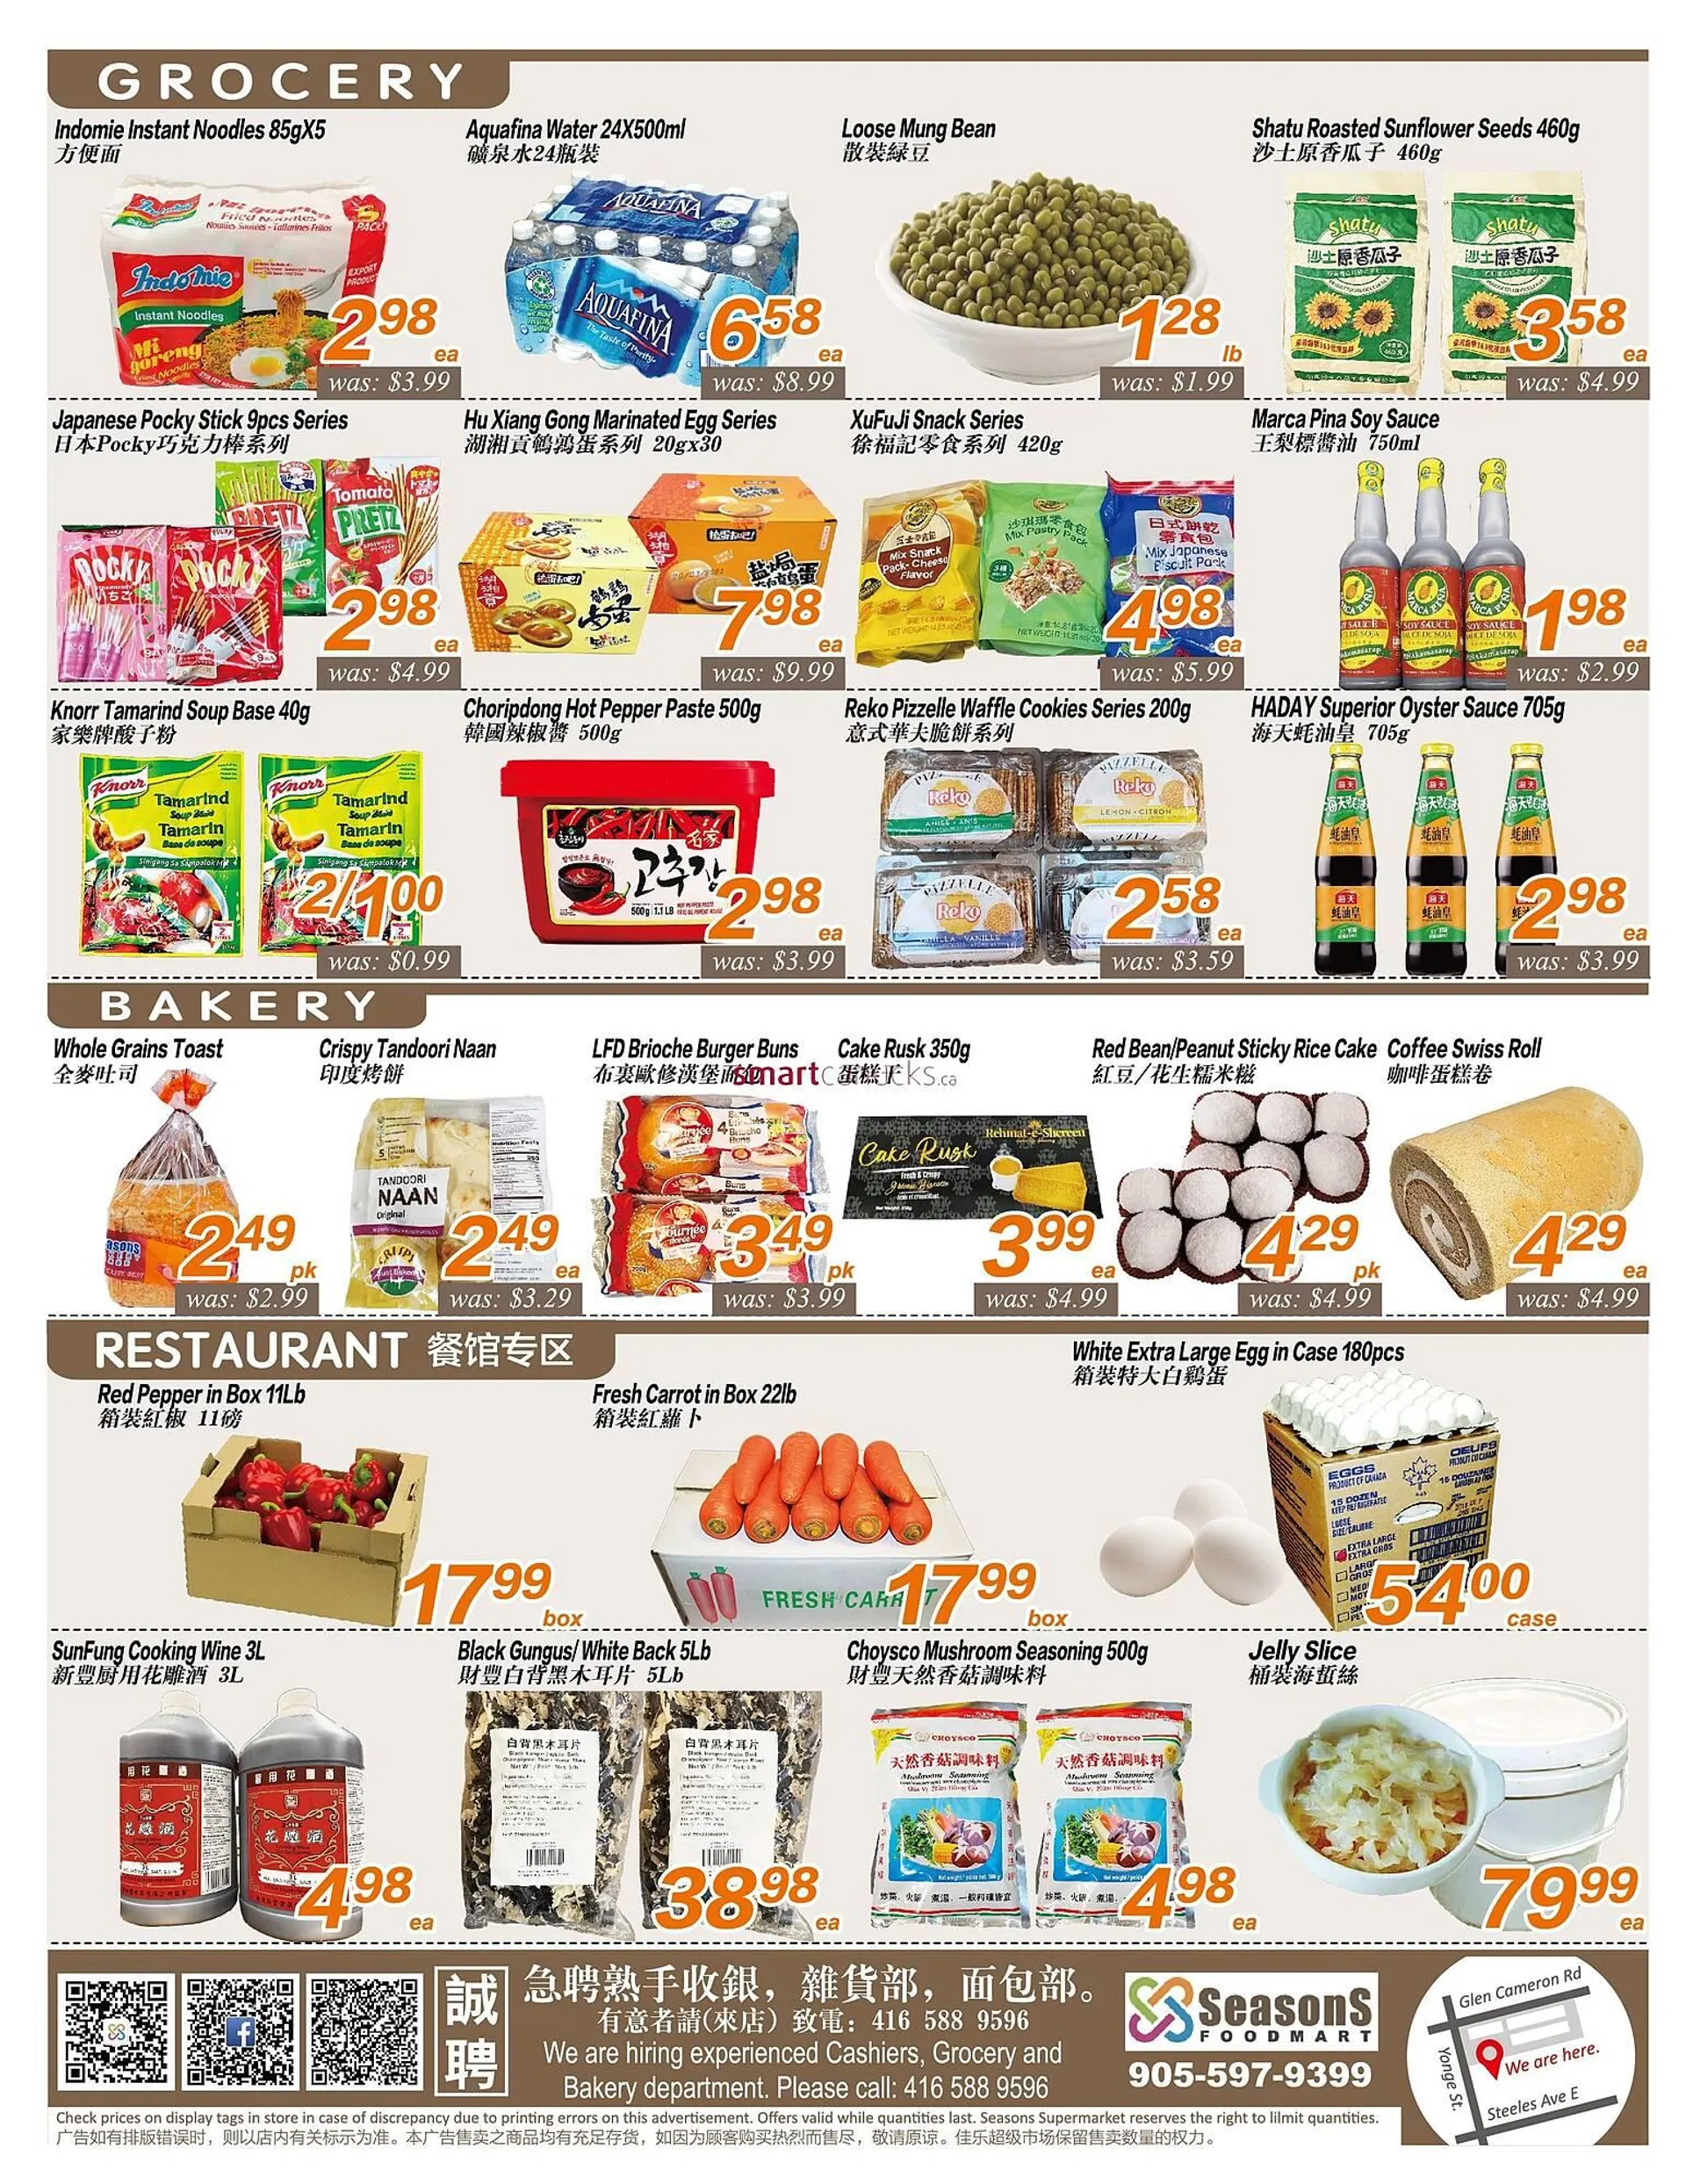 Seasons Foodmart flyer - 4